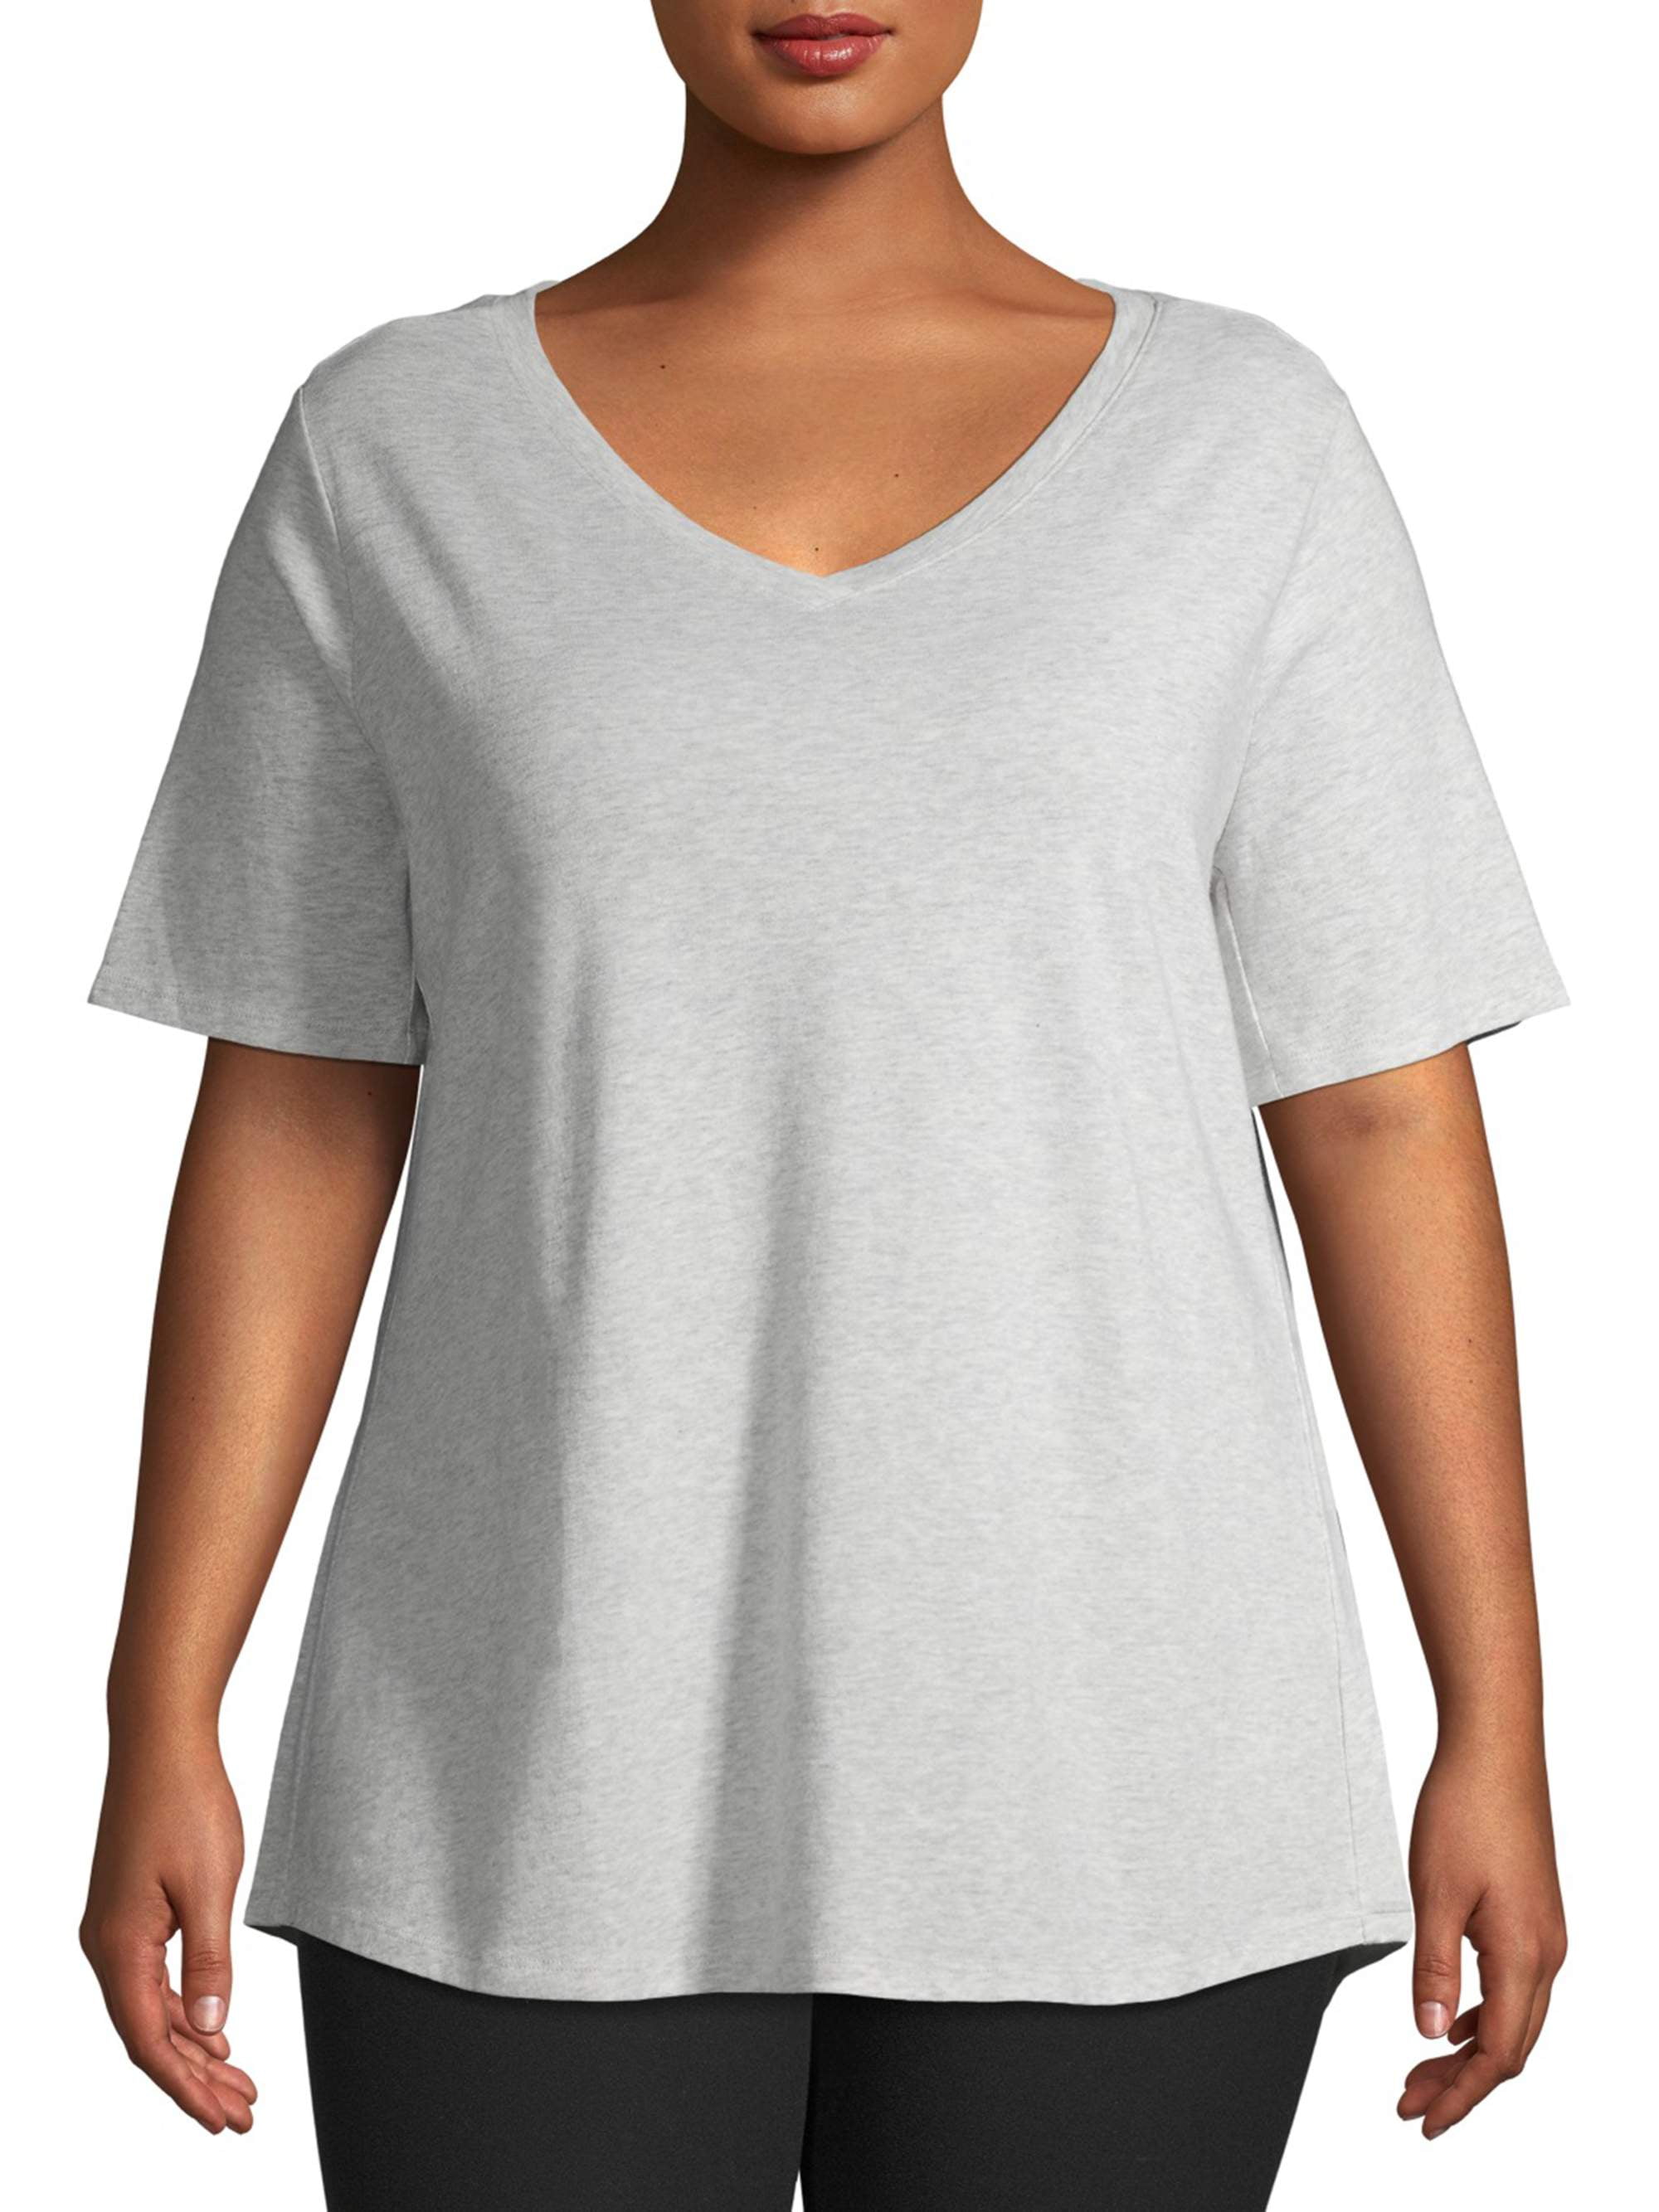 Terra & Sky Women's Plus Size Short Sleeve Everyday Essential V-Neck T ...